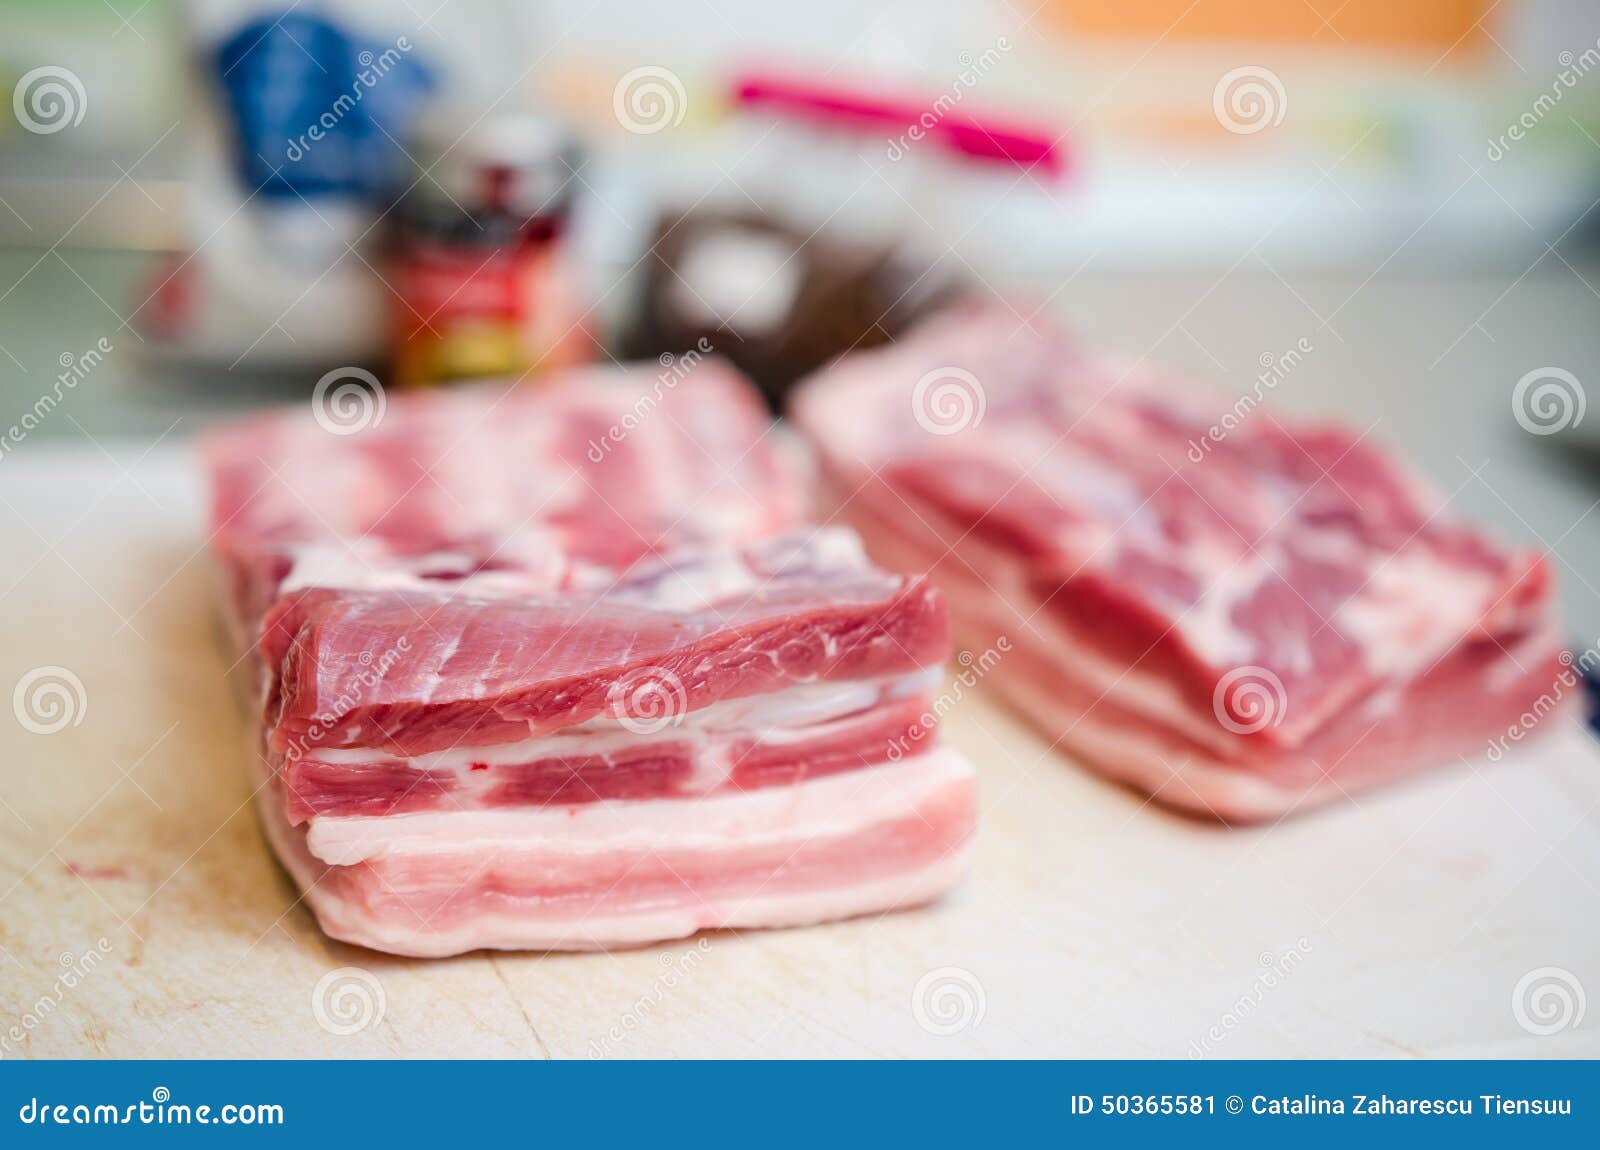 raw pork belly closeup